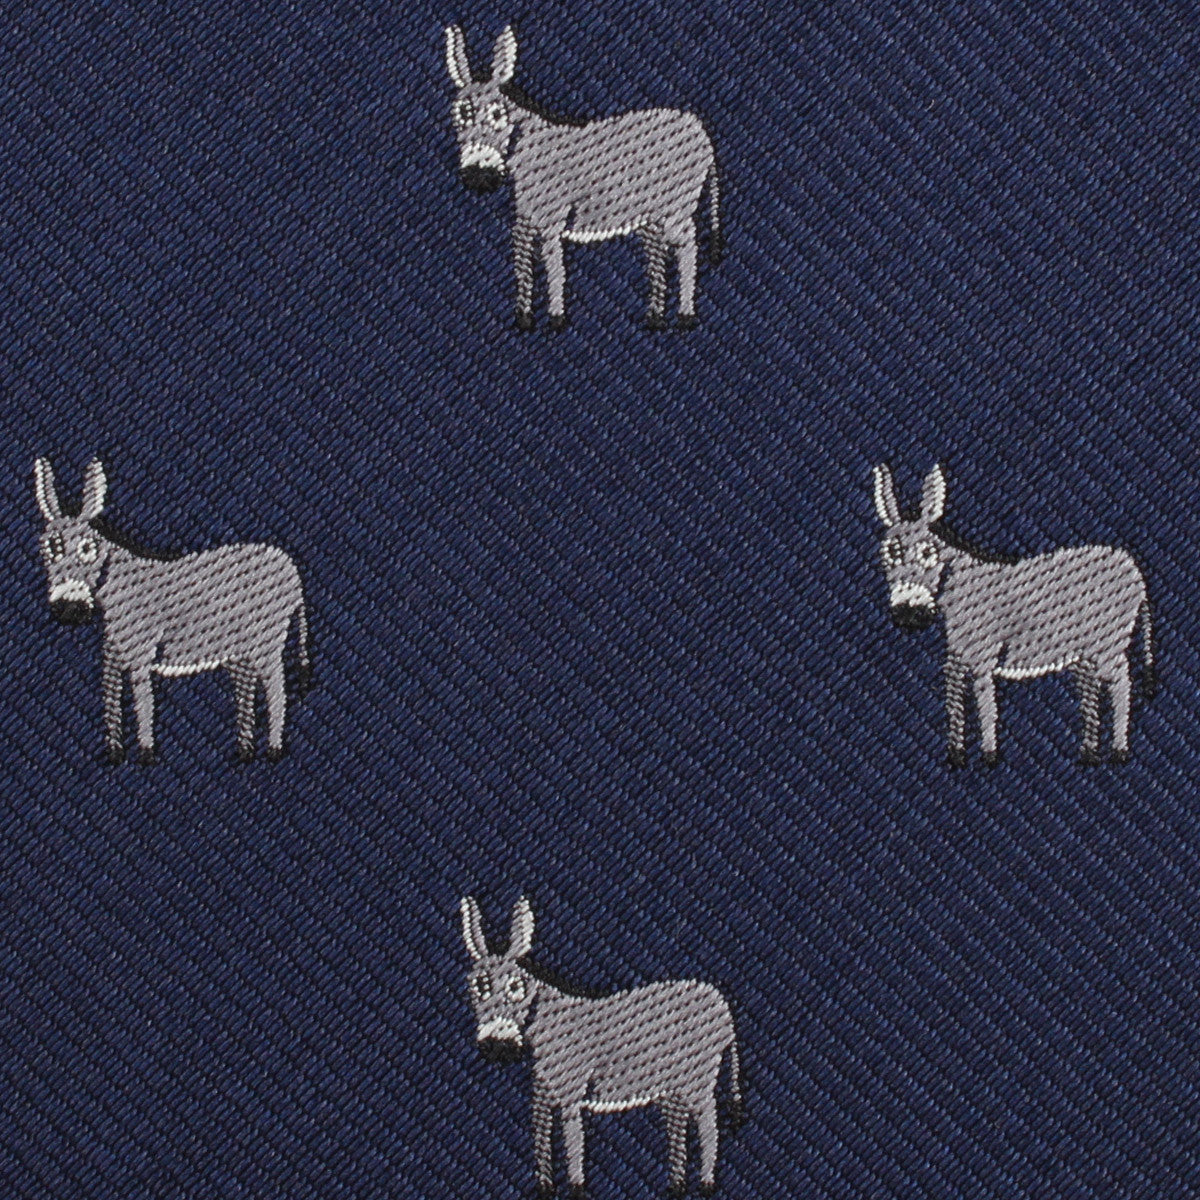 Donkey Fabric Necktie